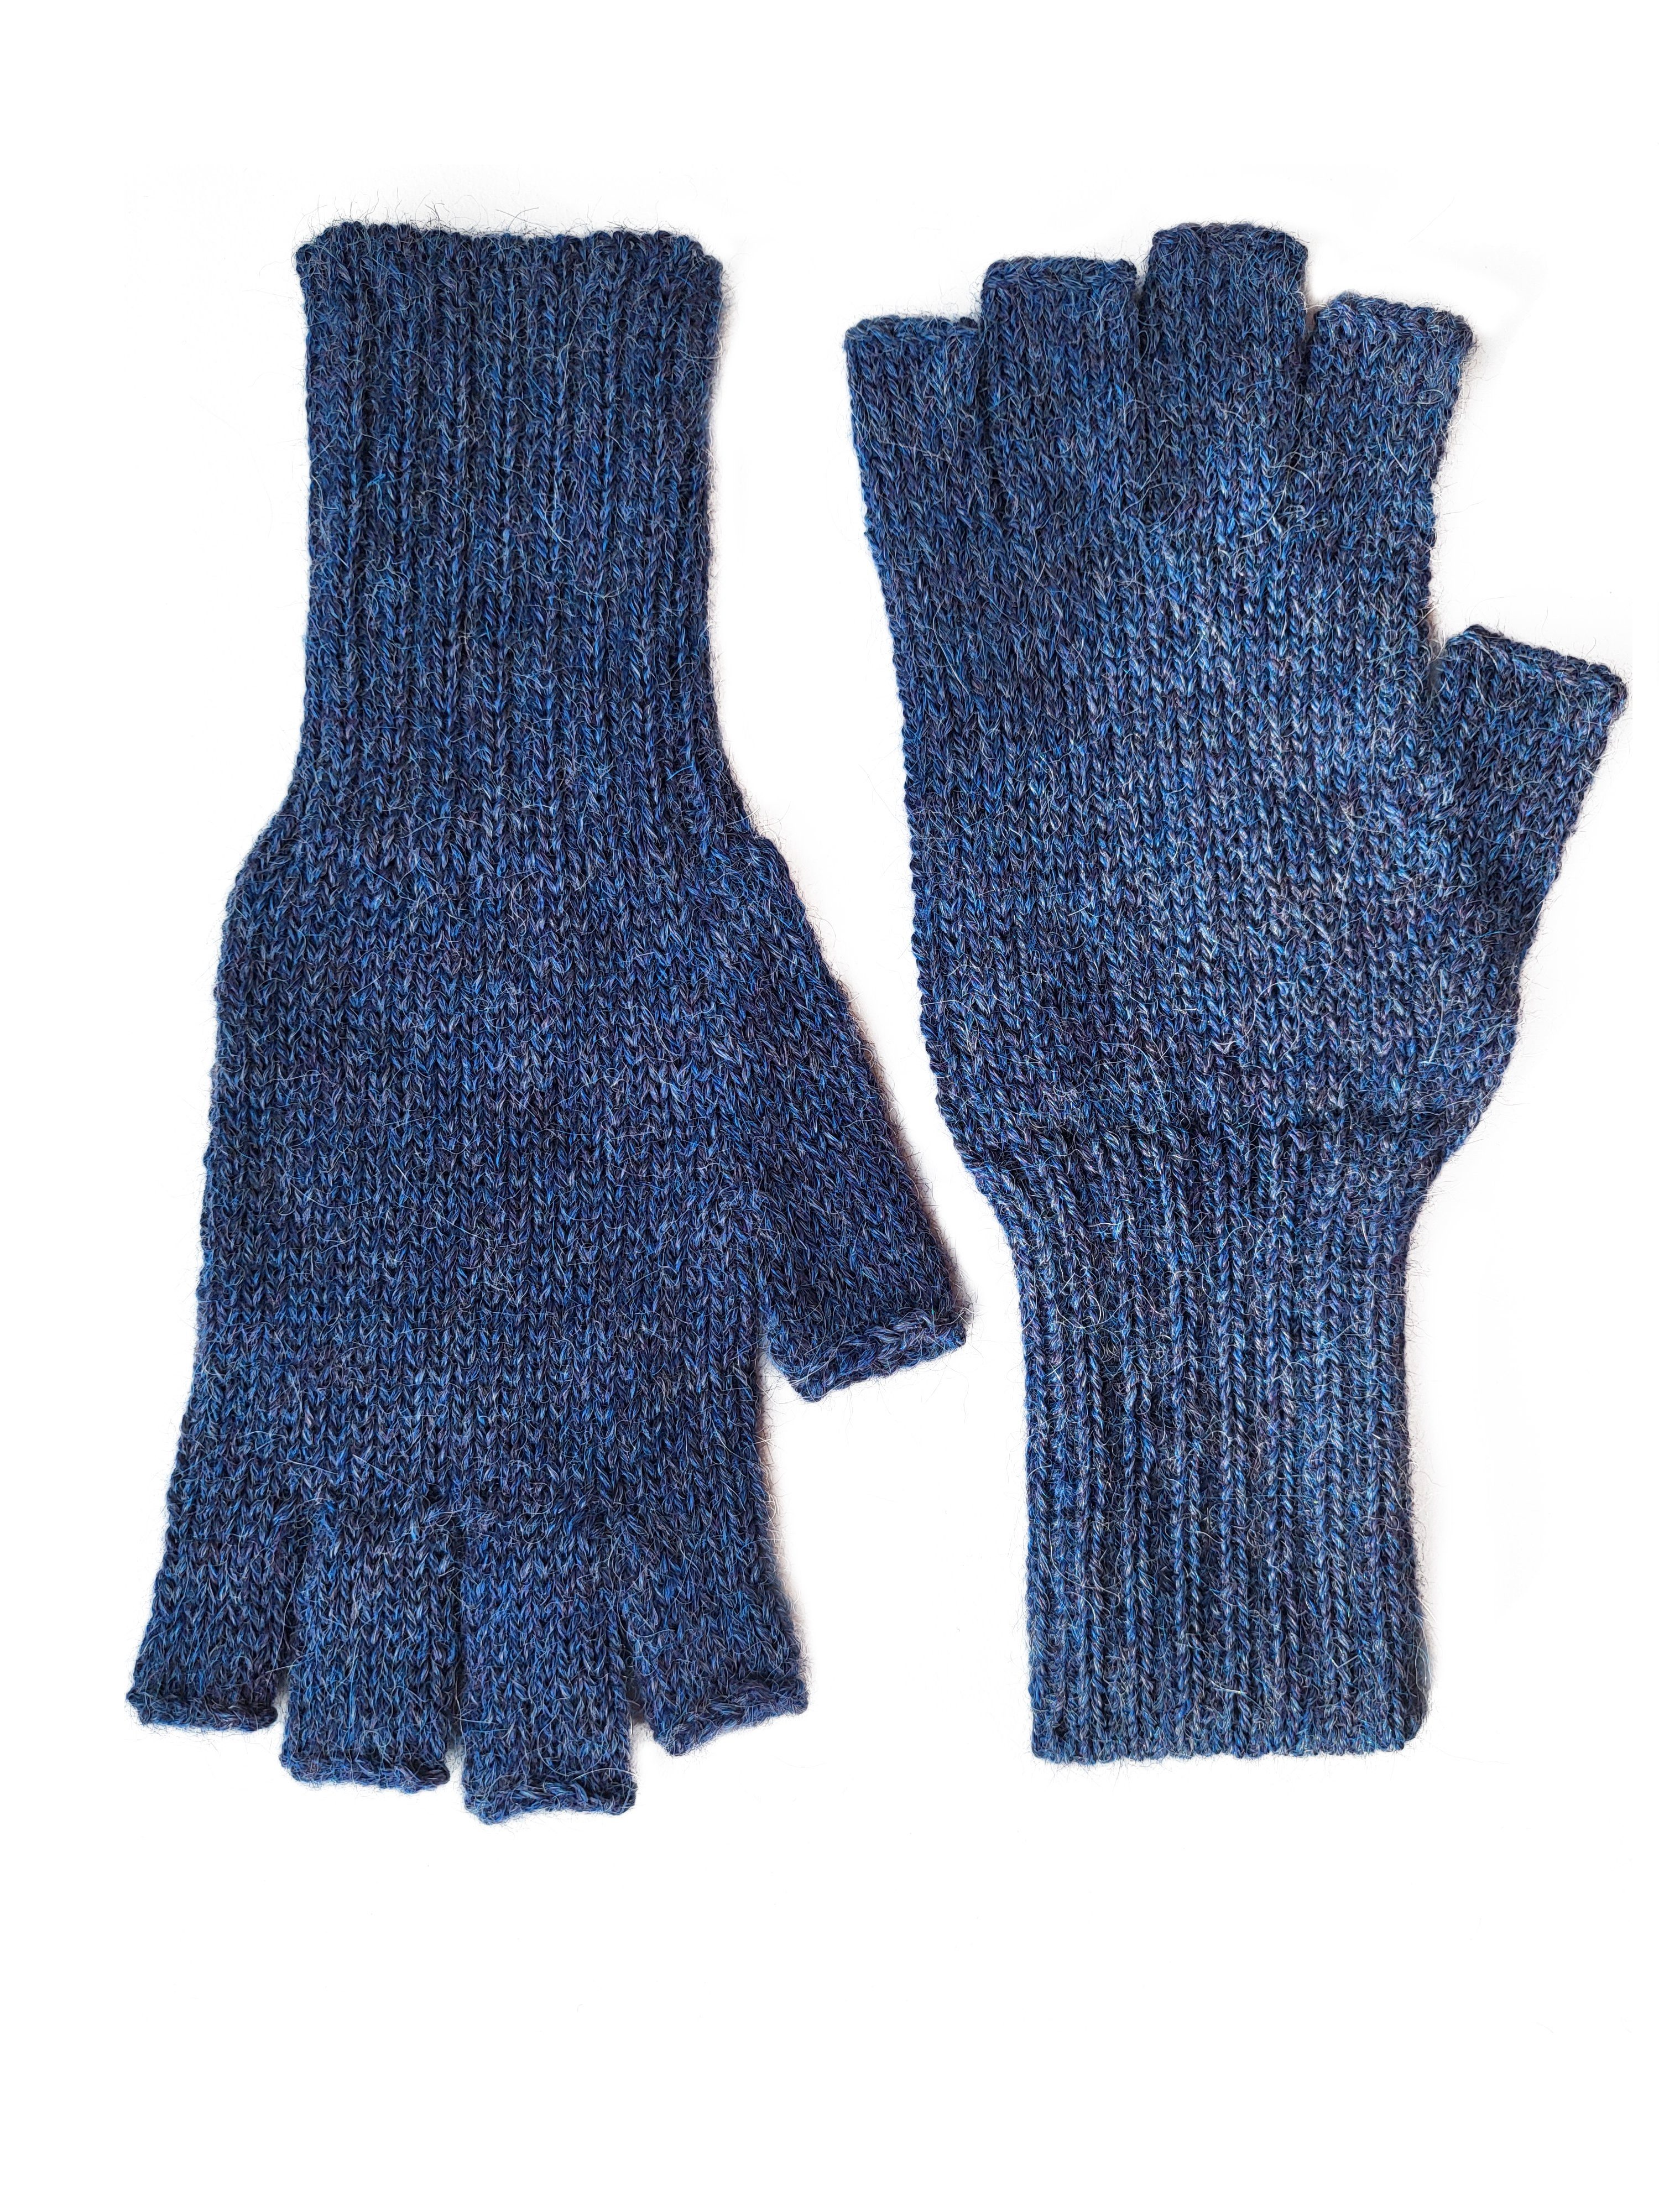 Posh Gear Strickhandschuhe Guantiless Alpaka Halb-Fingerhandschuhe dunkel blau